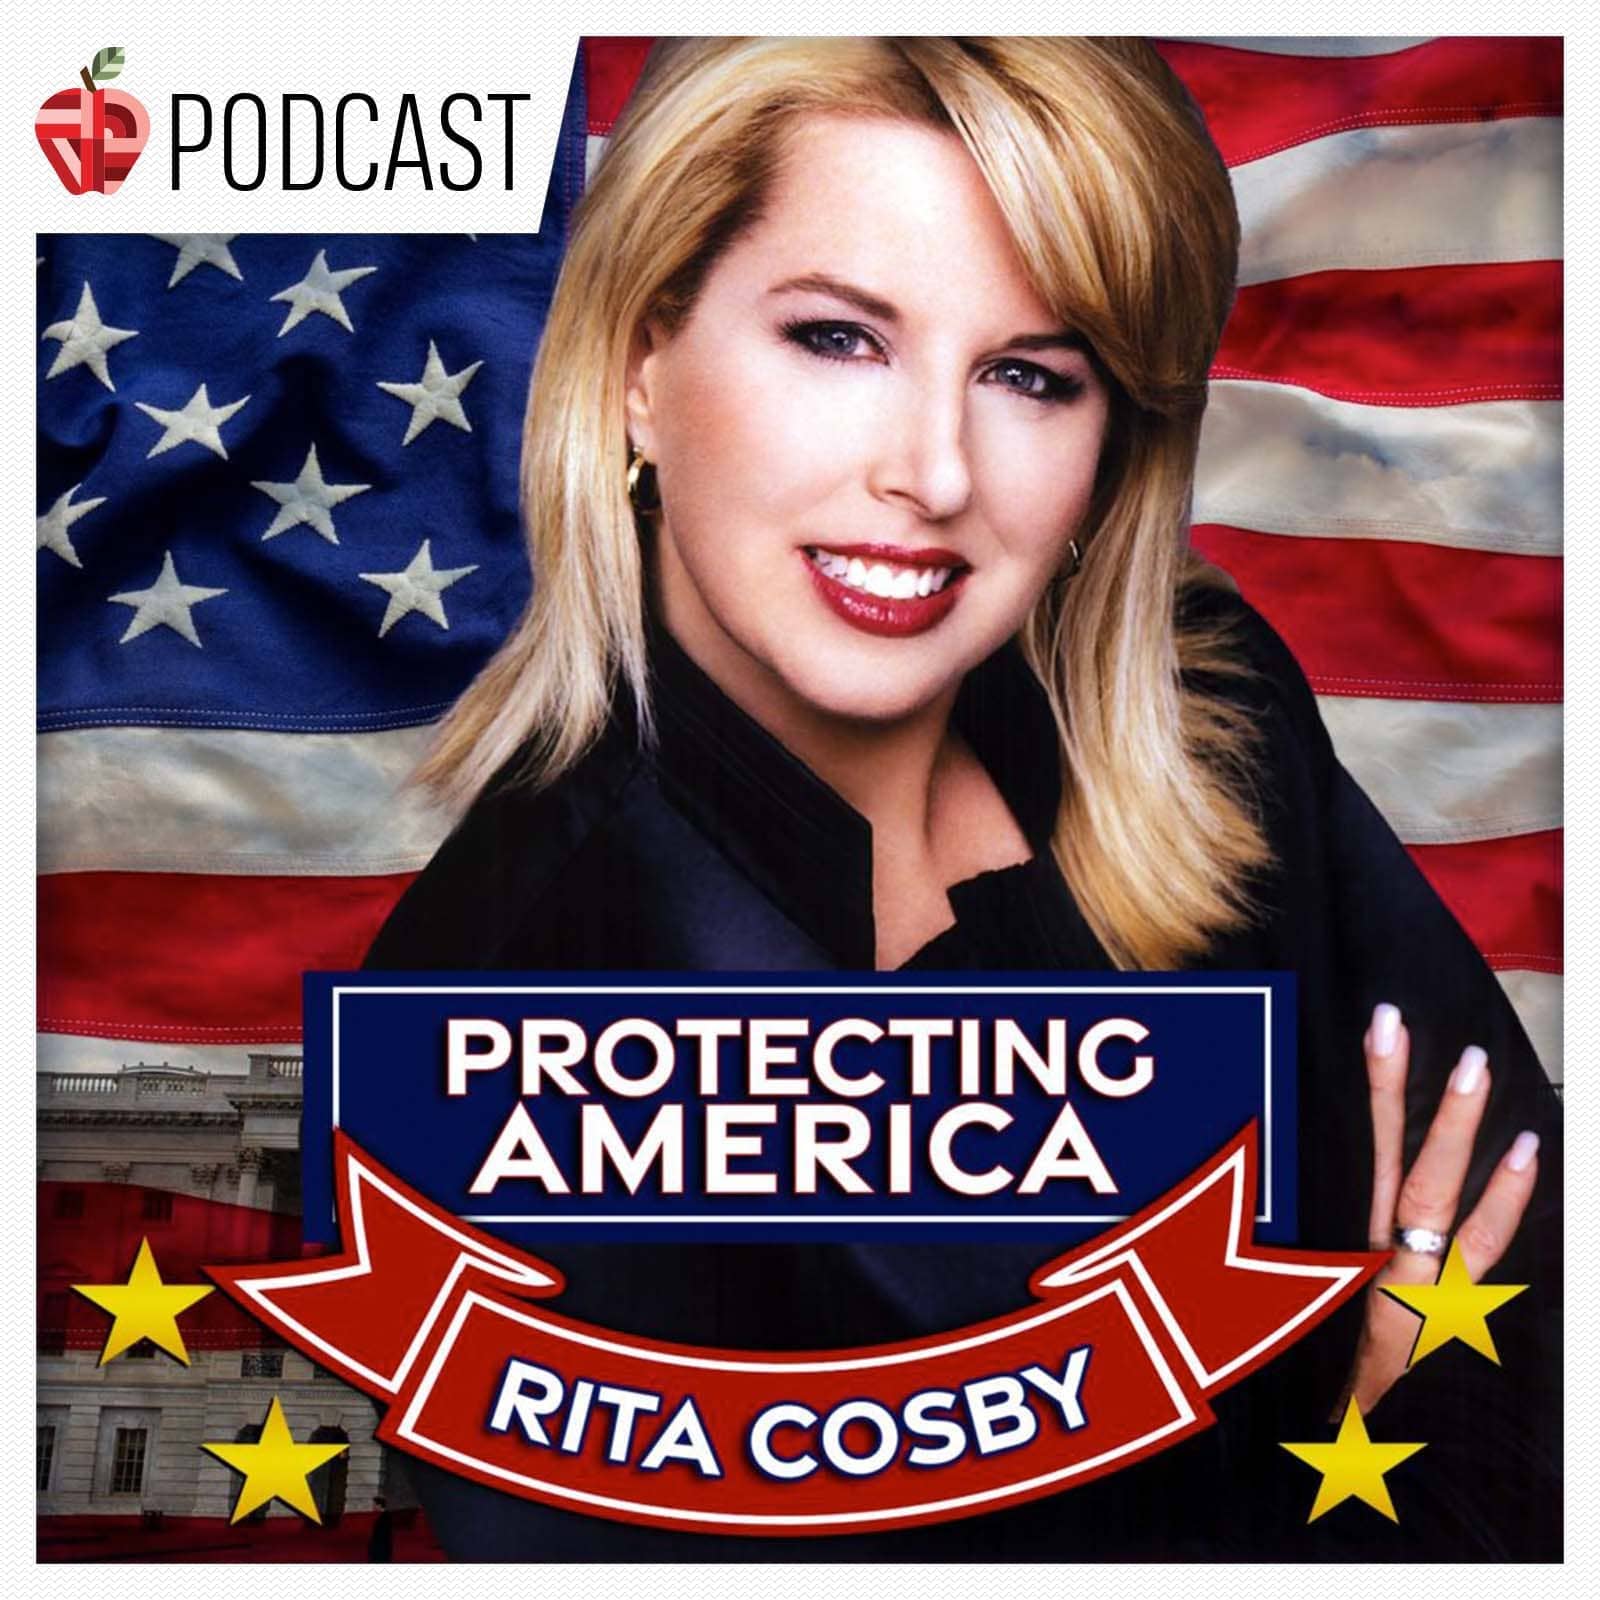 rita-cosby-protecting-america-correct-podcast-new-logo-19